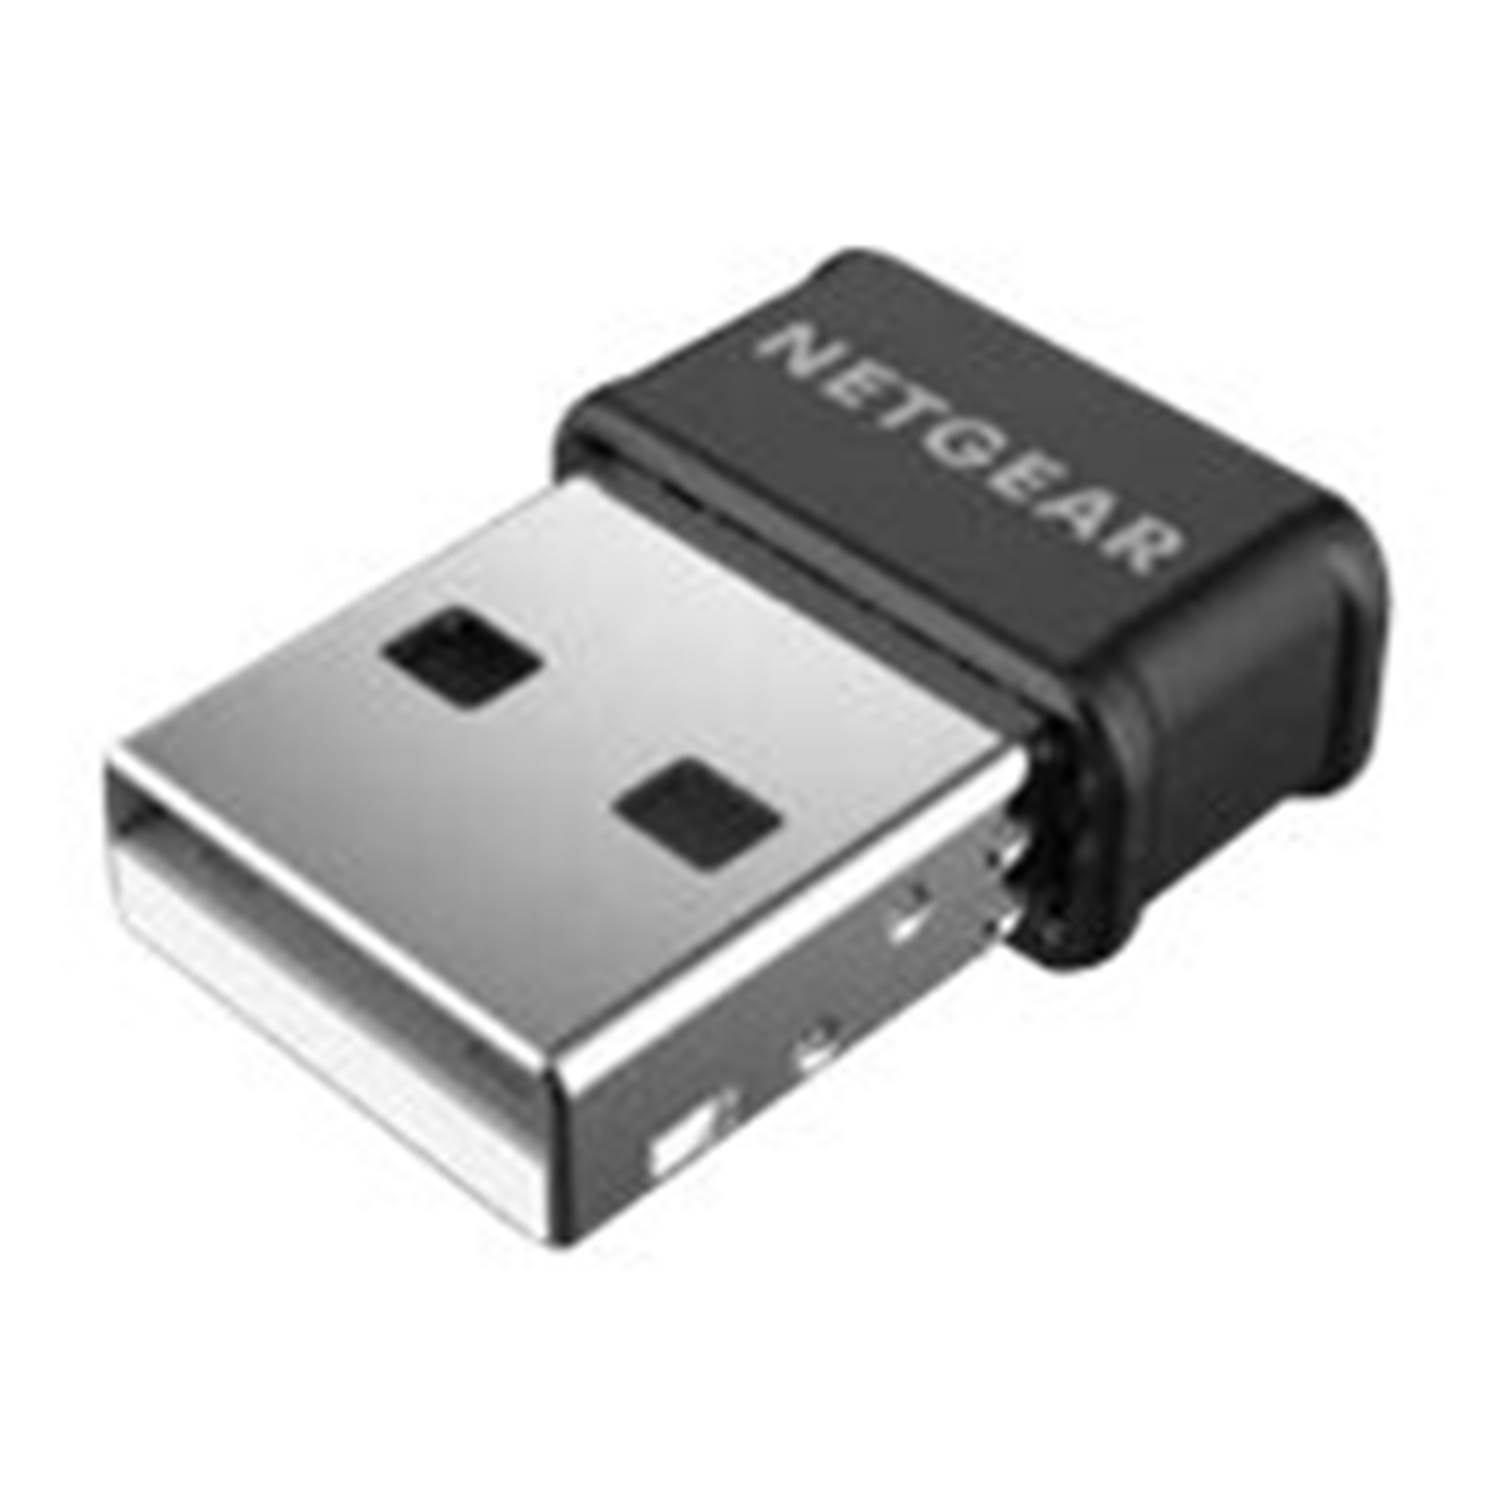 Netgear A6150 — AC1200 Dual Band WiFi USB Mini Adapter